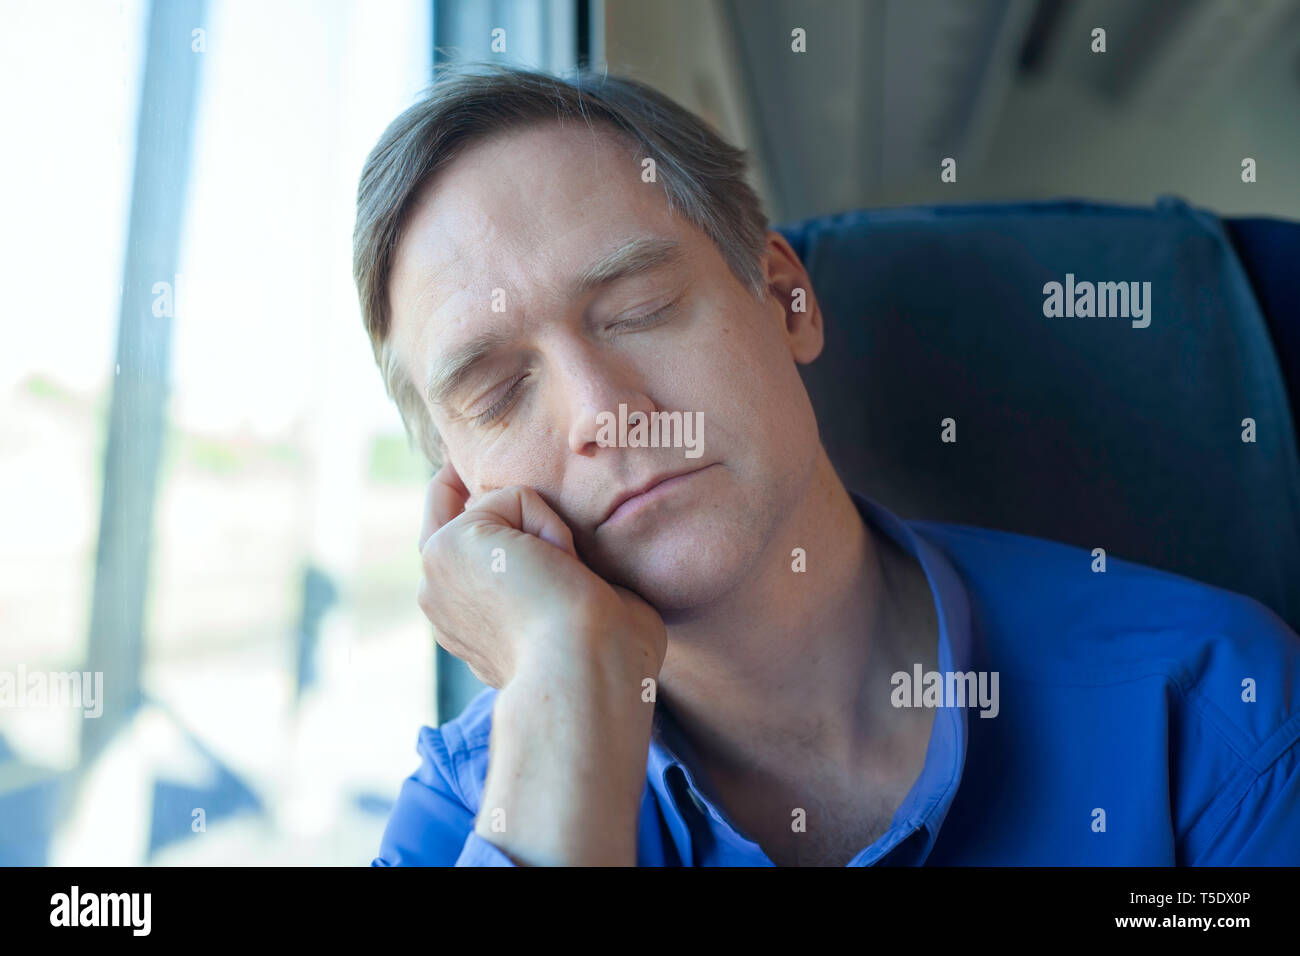 Caucasian man wearing blue shirt in early fifties sleeping and resting head on hand near train window Stock Photo